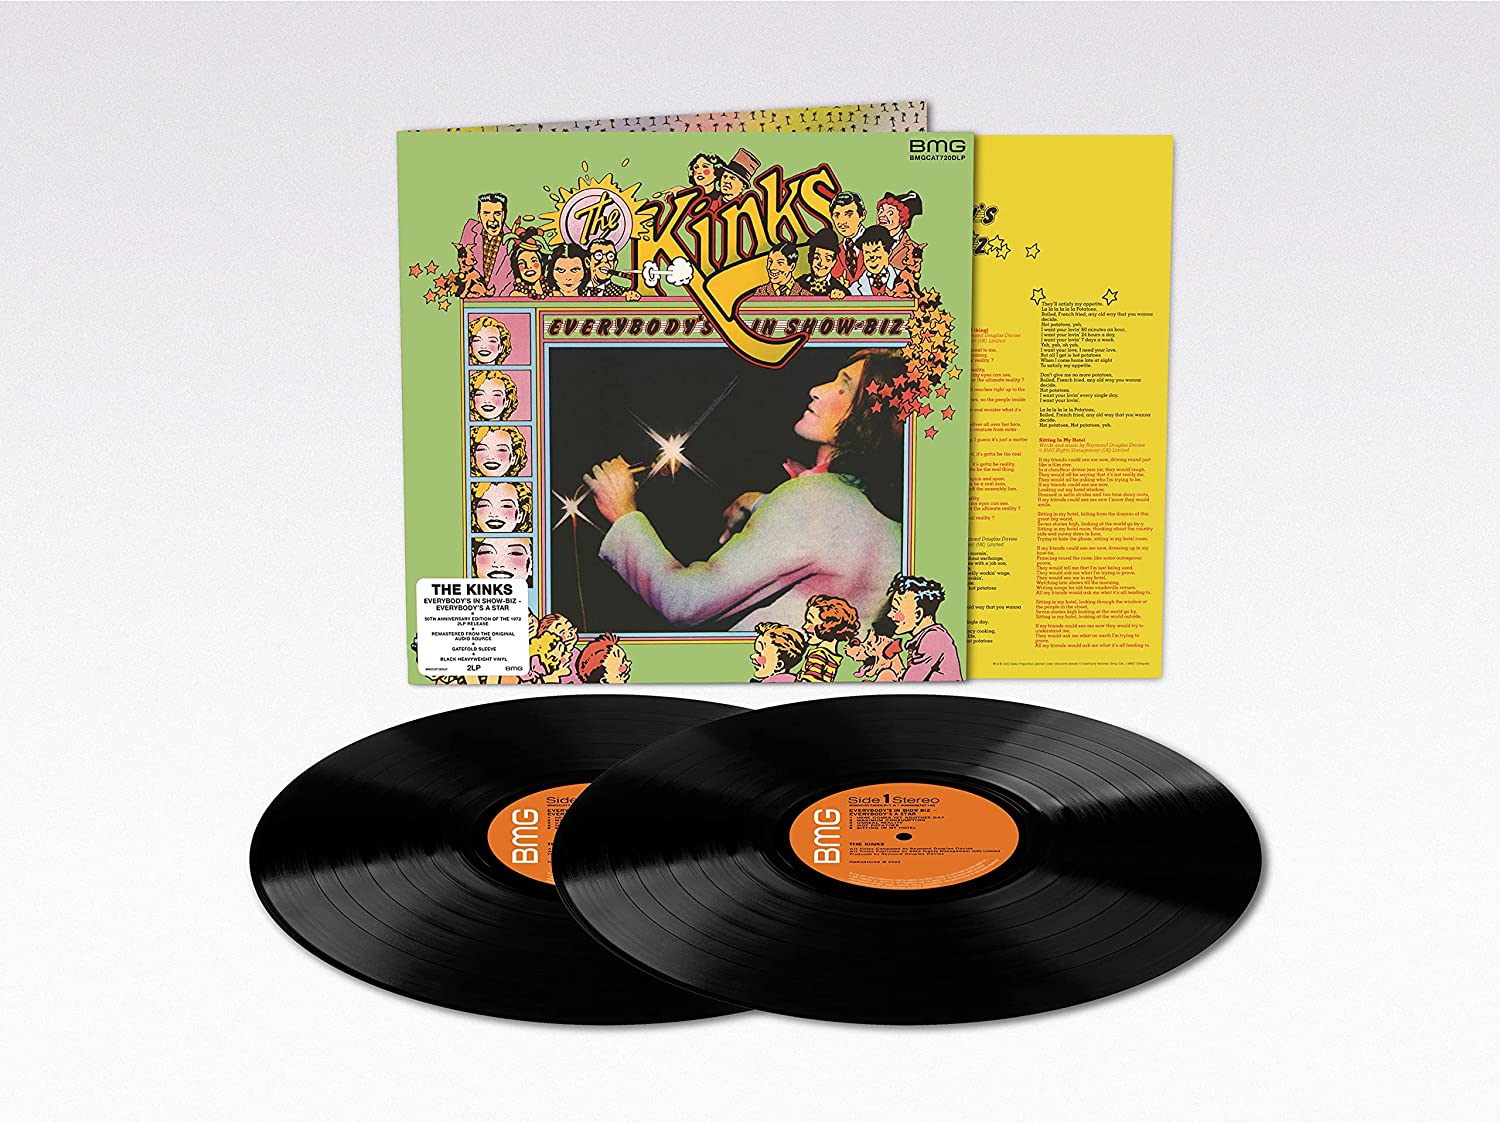 The Kinks / Everybody's in Showbiz 2LP vinyl